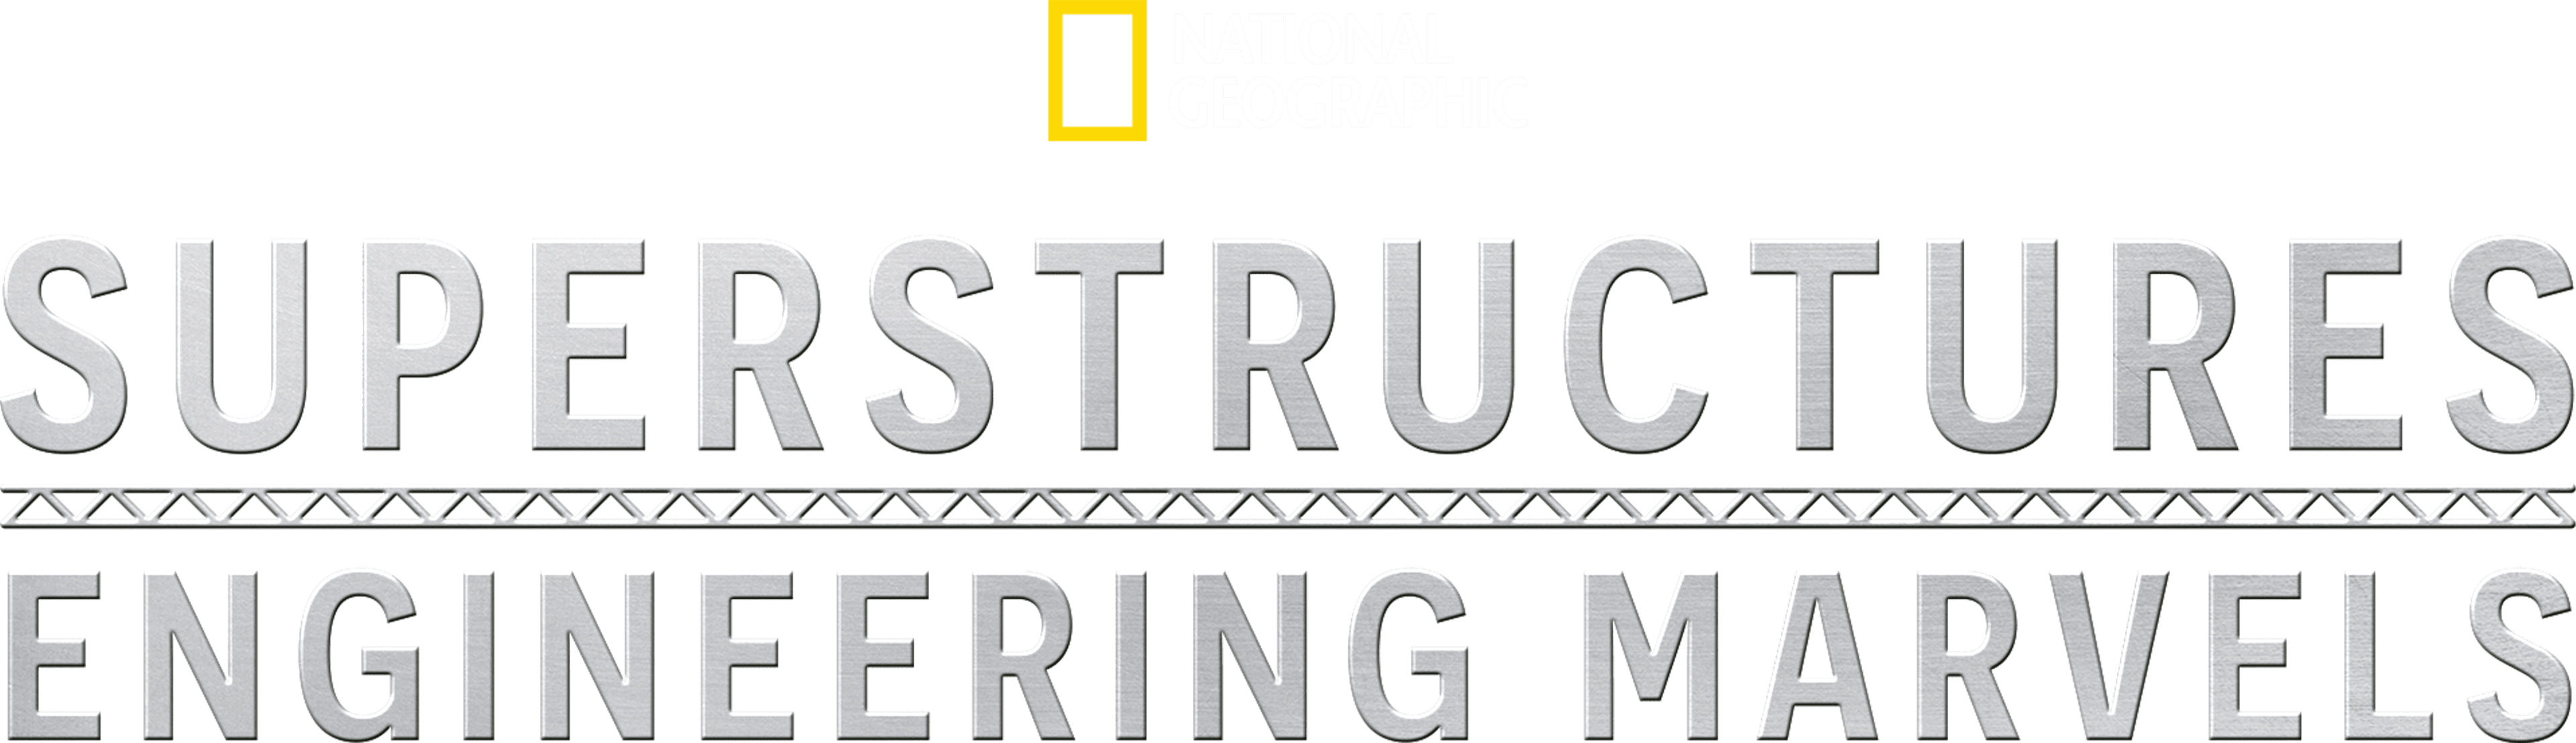 Superstructures: Engineering Marvels logo